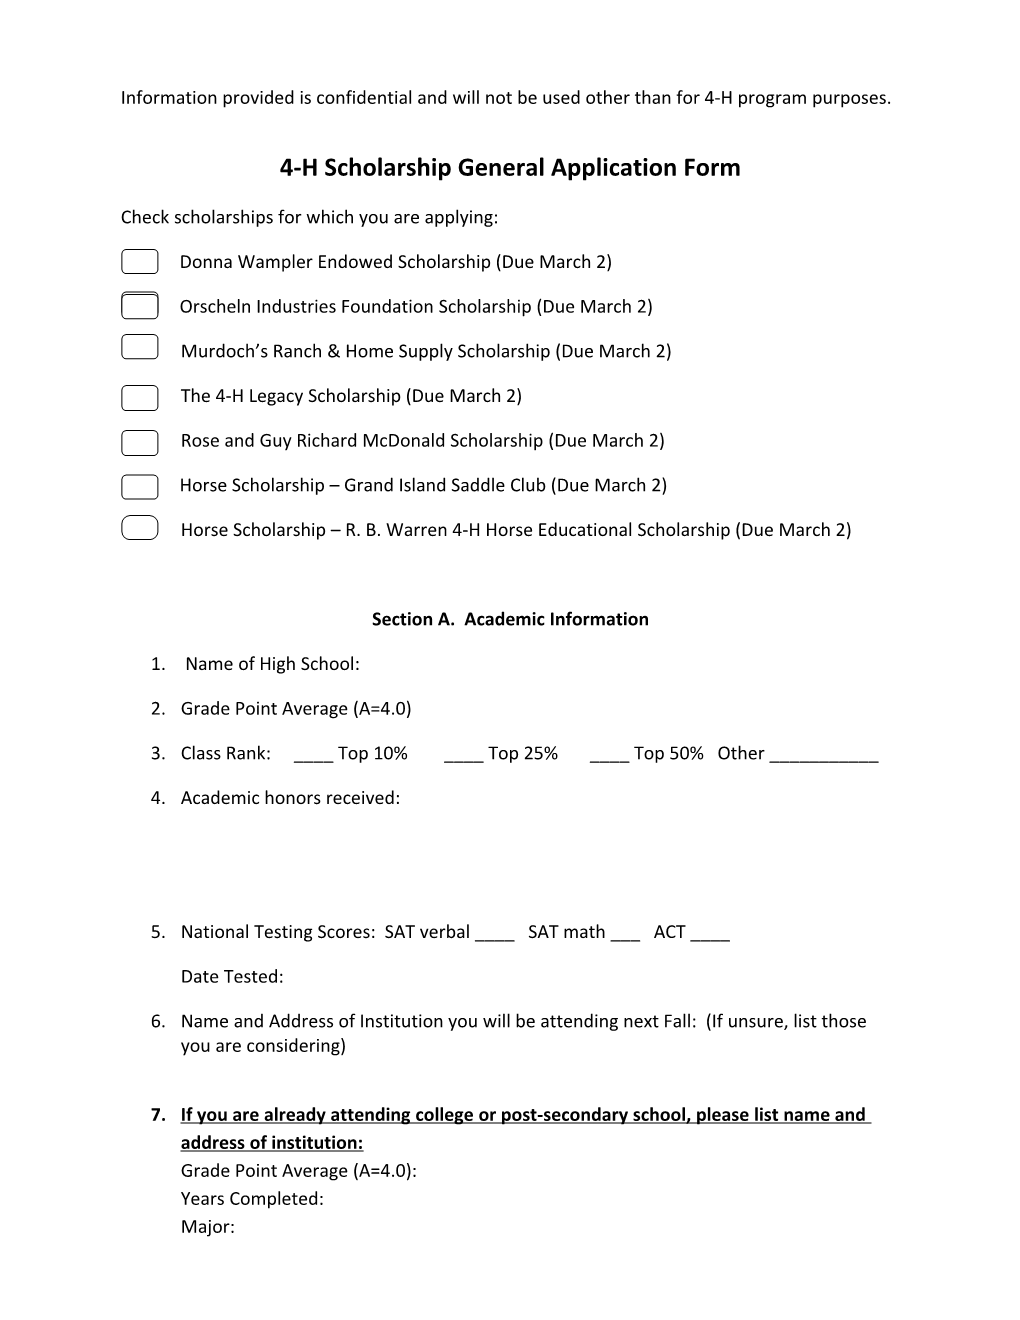 4-H Scholarship General Information Form